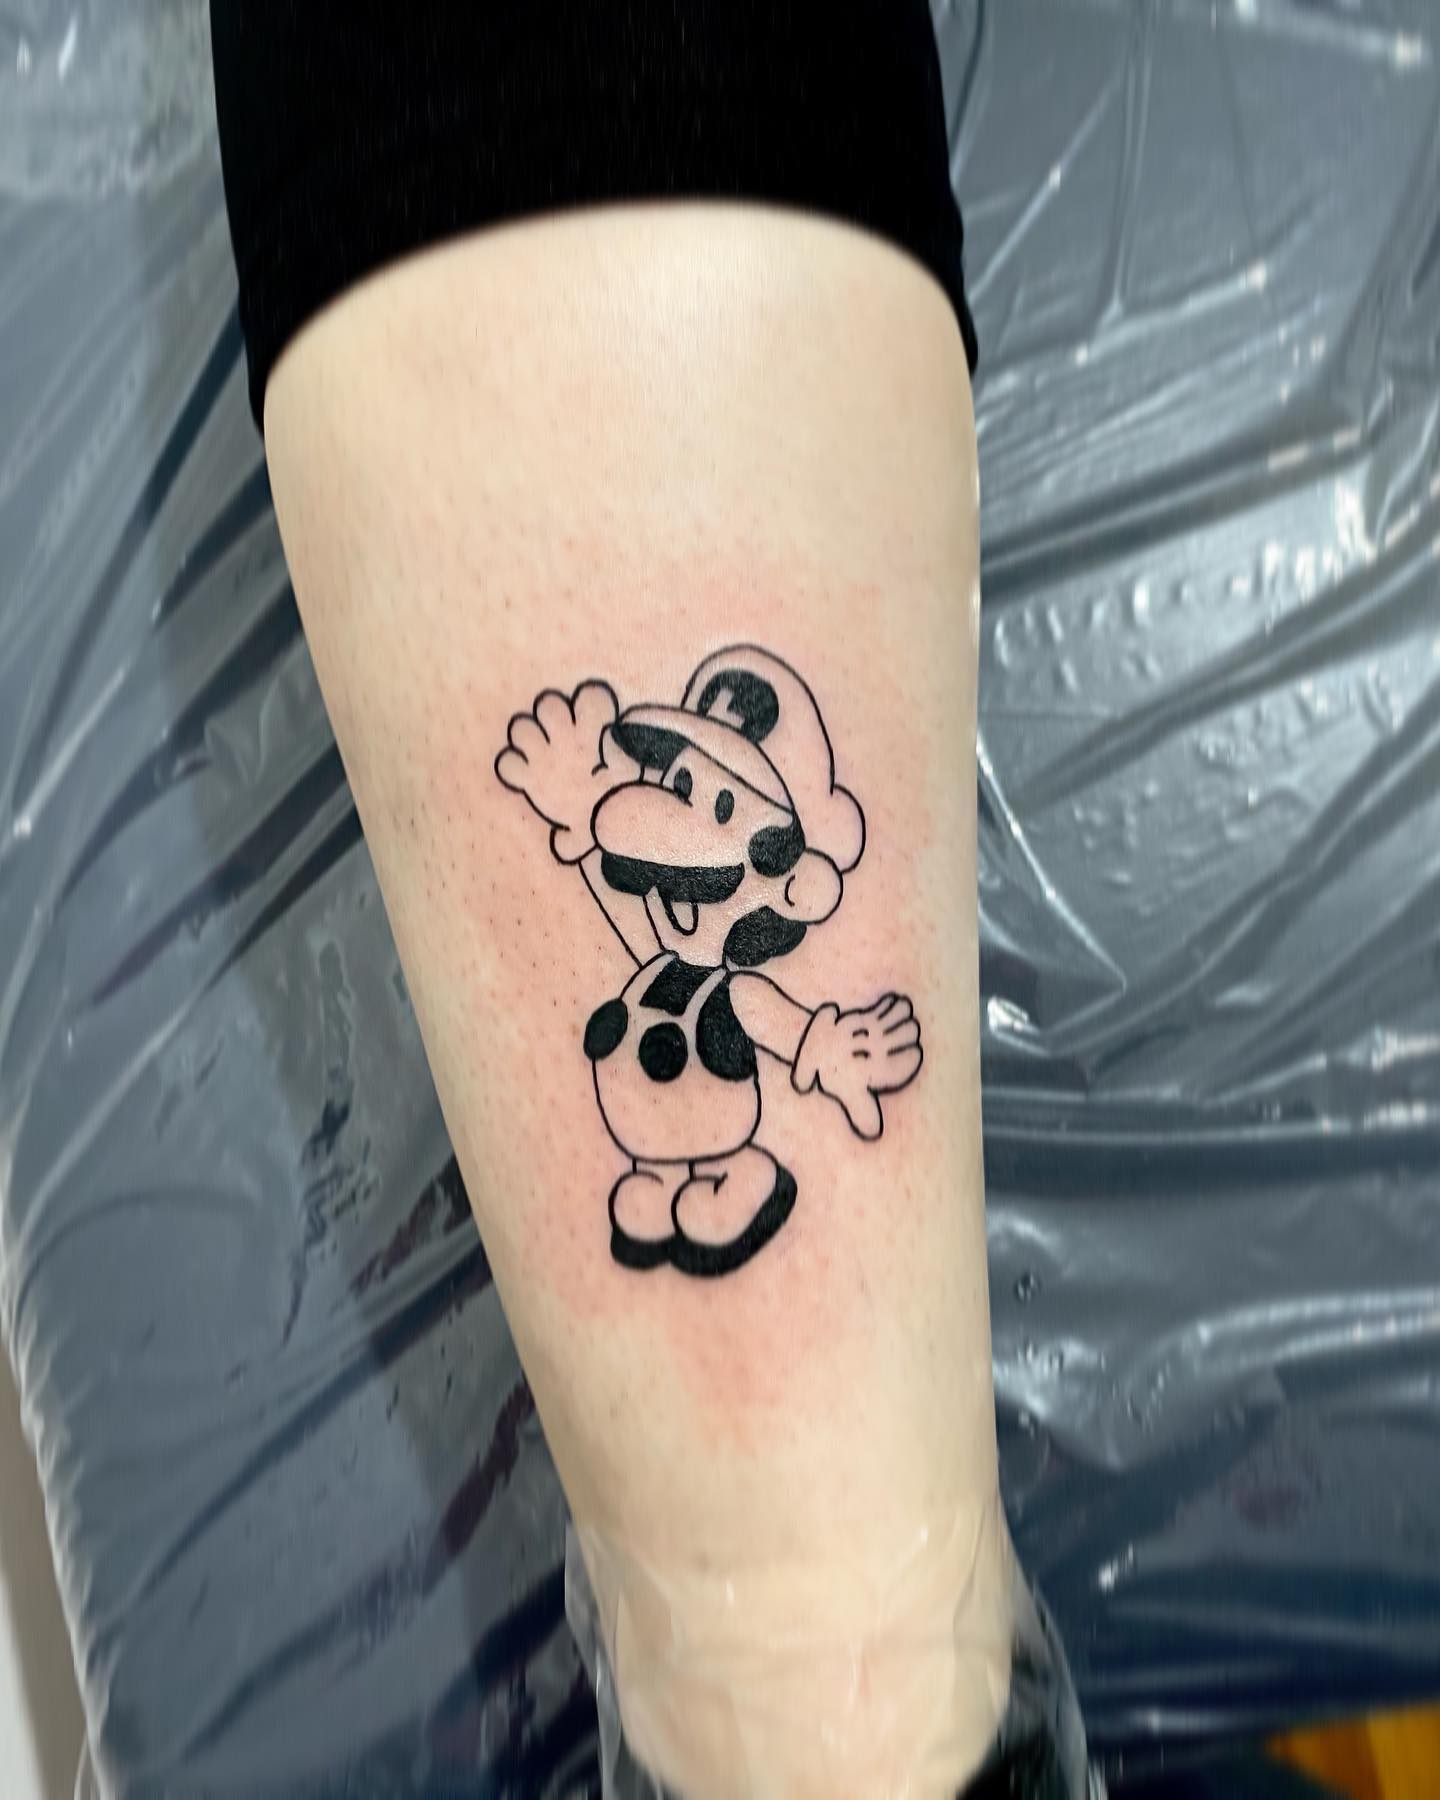 Tatuaje de ternero de Mario